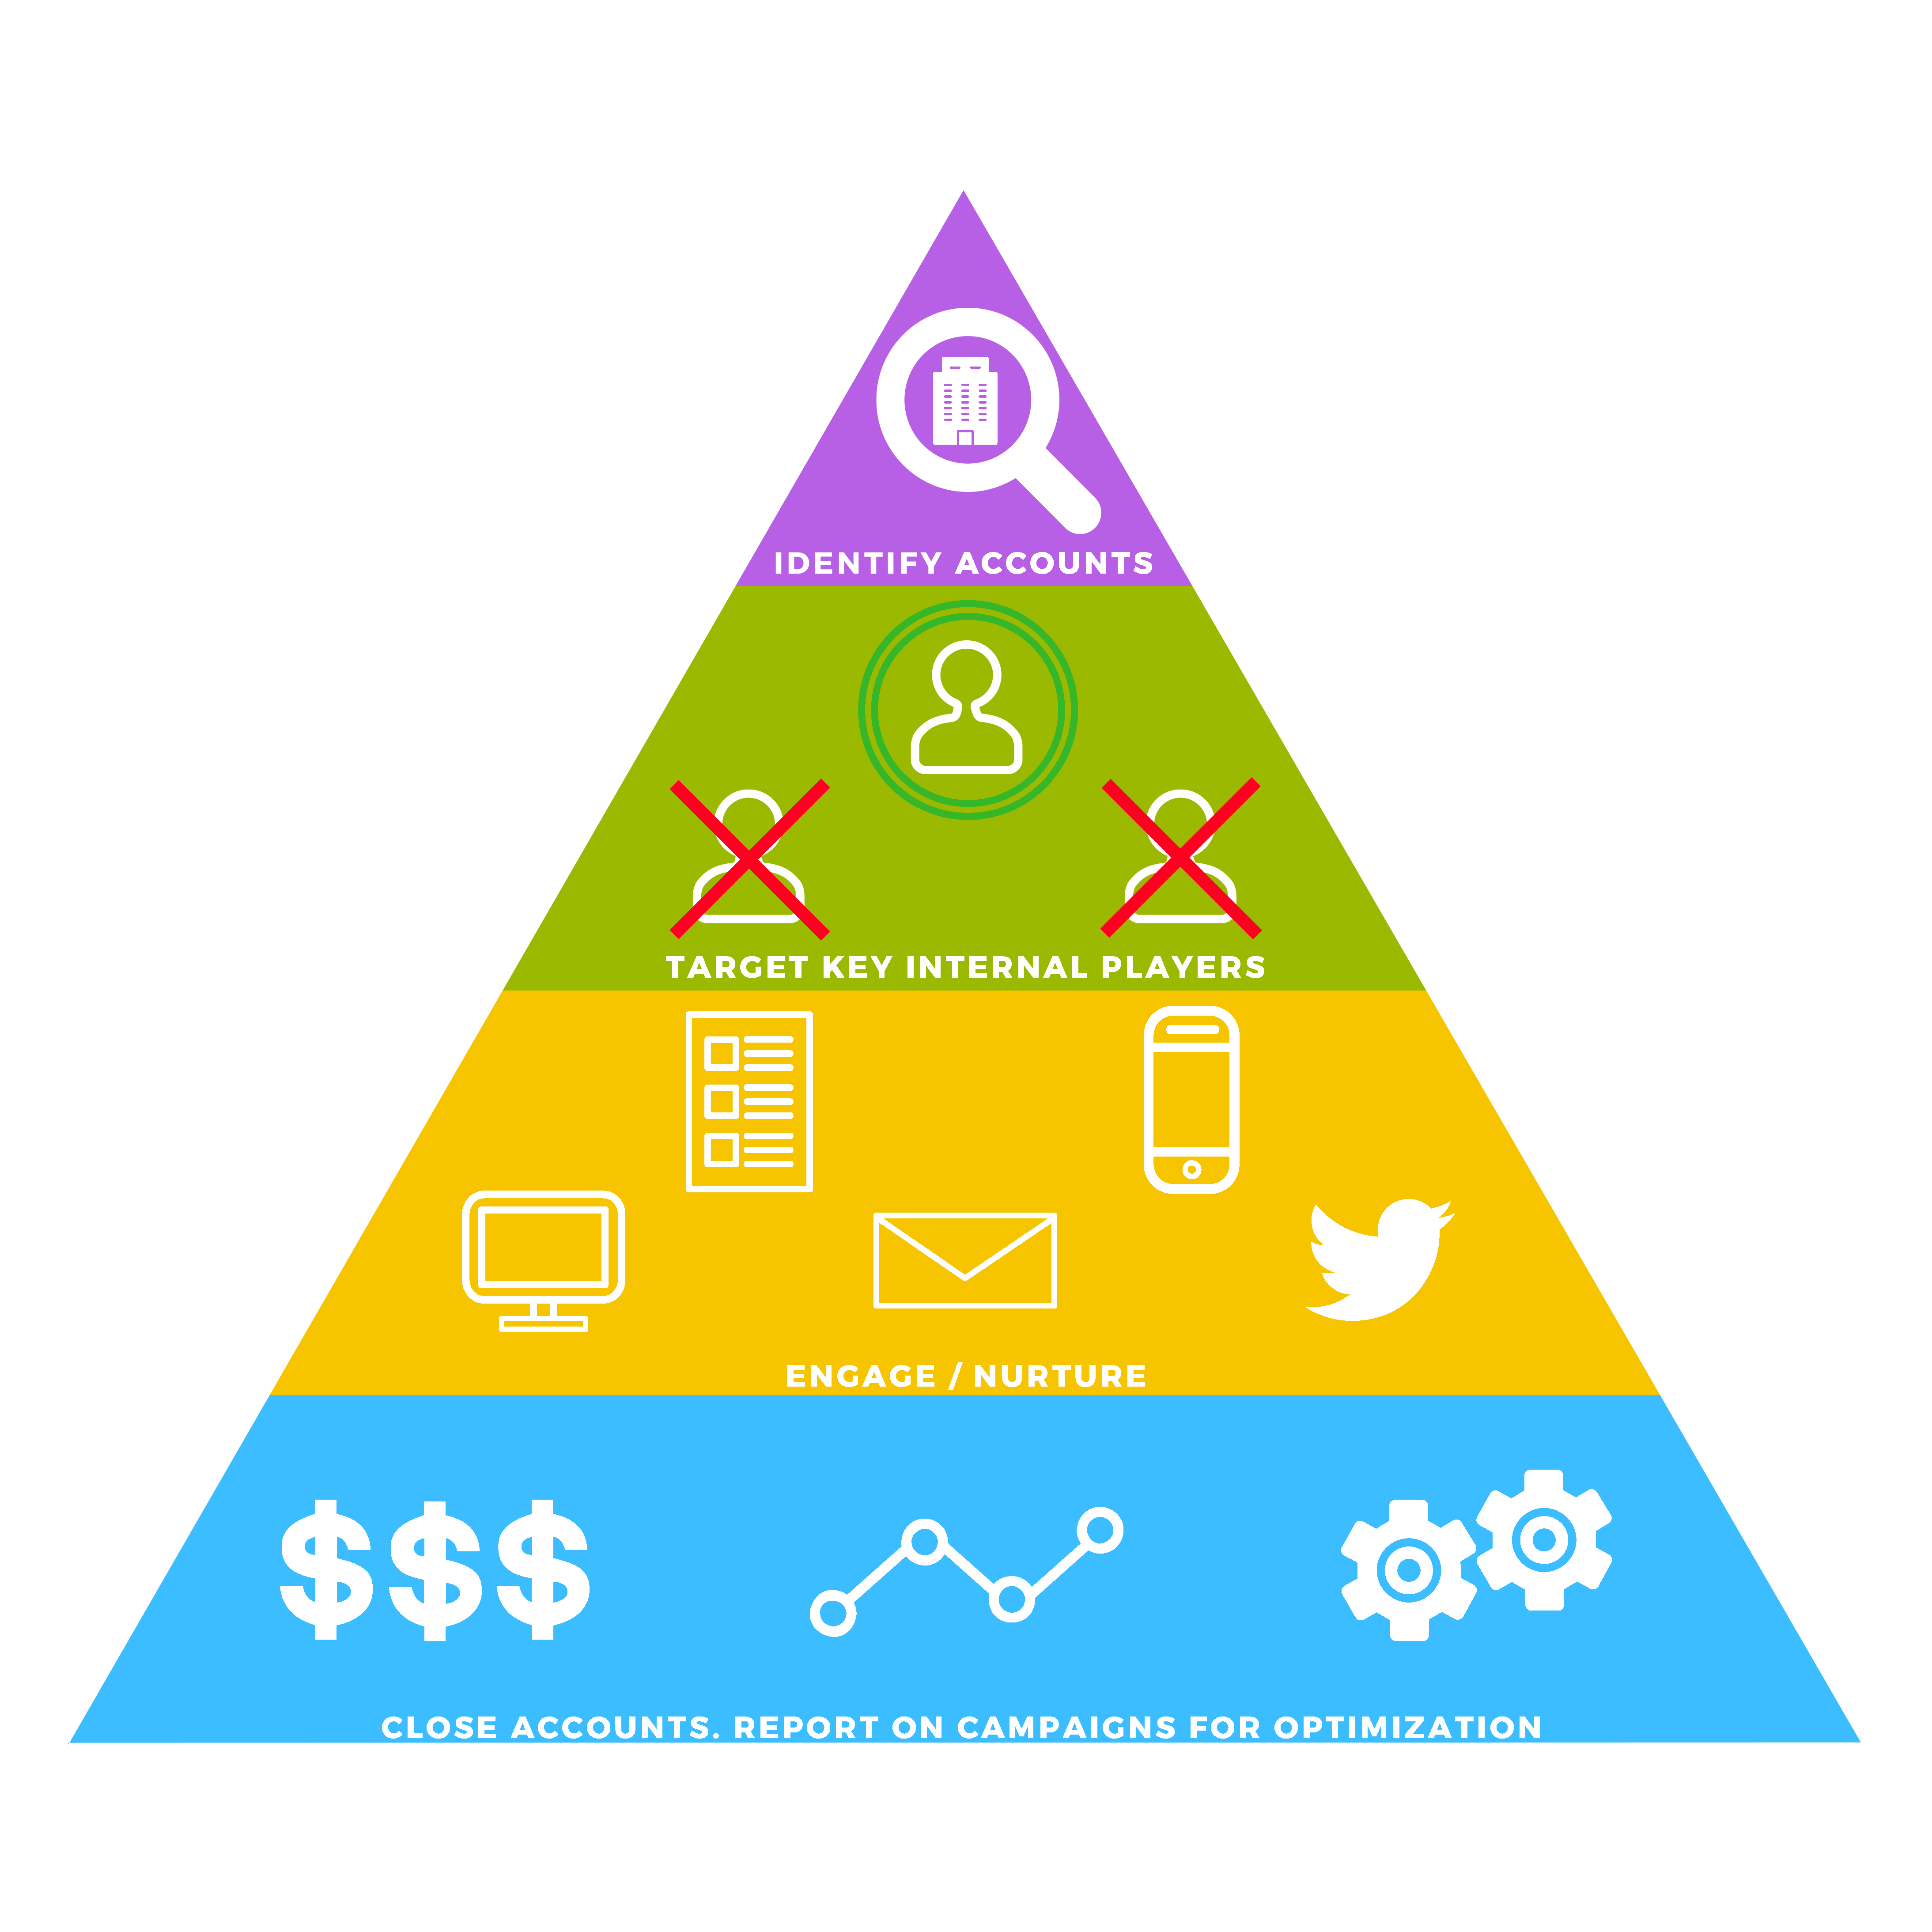 Account-Based Marketing Tactics Pyramid discrpiting next steps